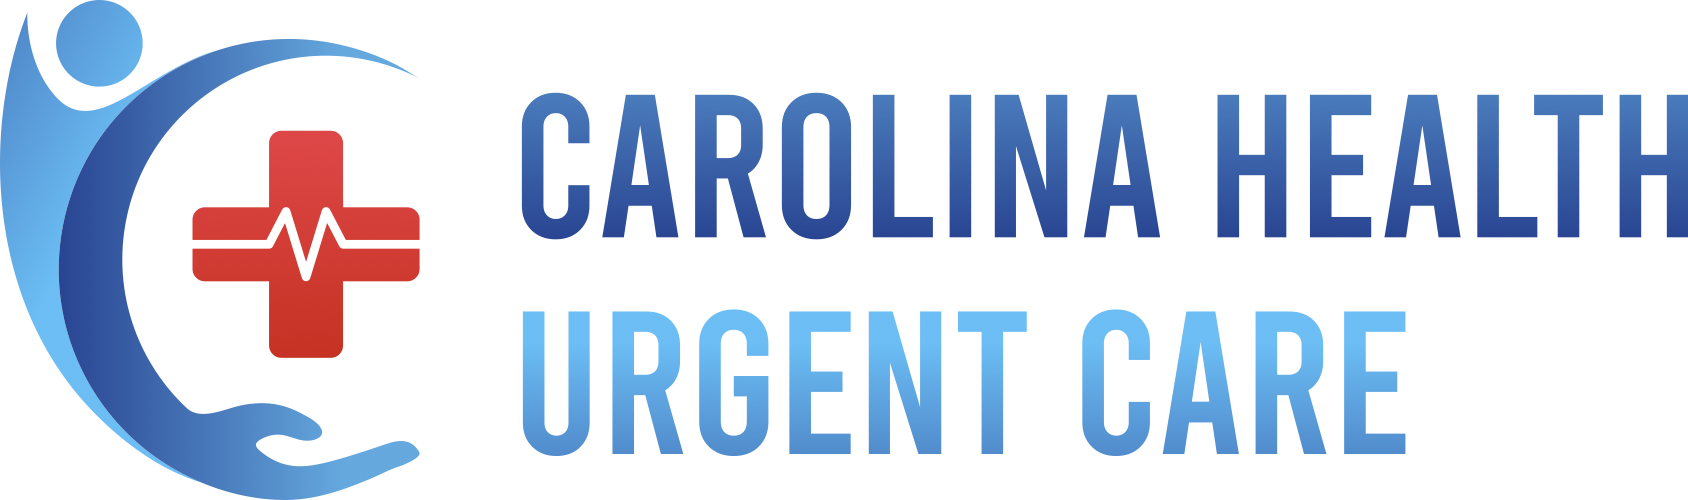 Carolina Health Urgent Care - Greenville Logo